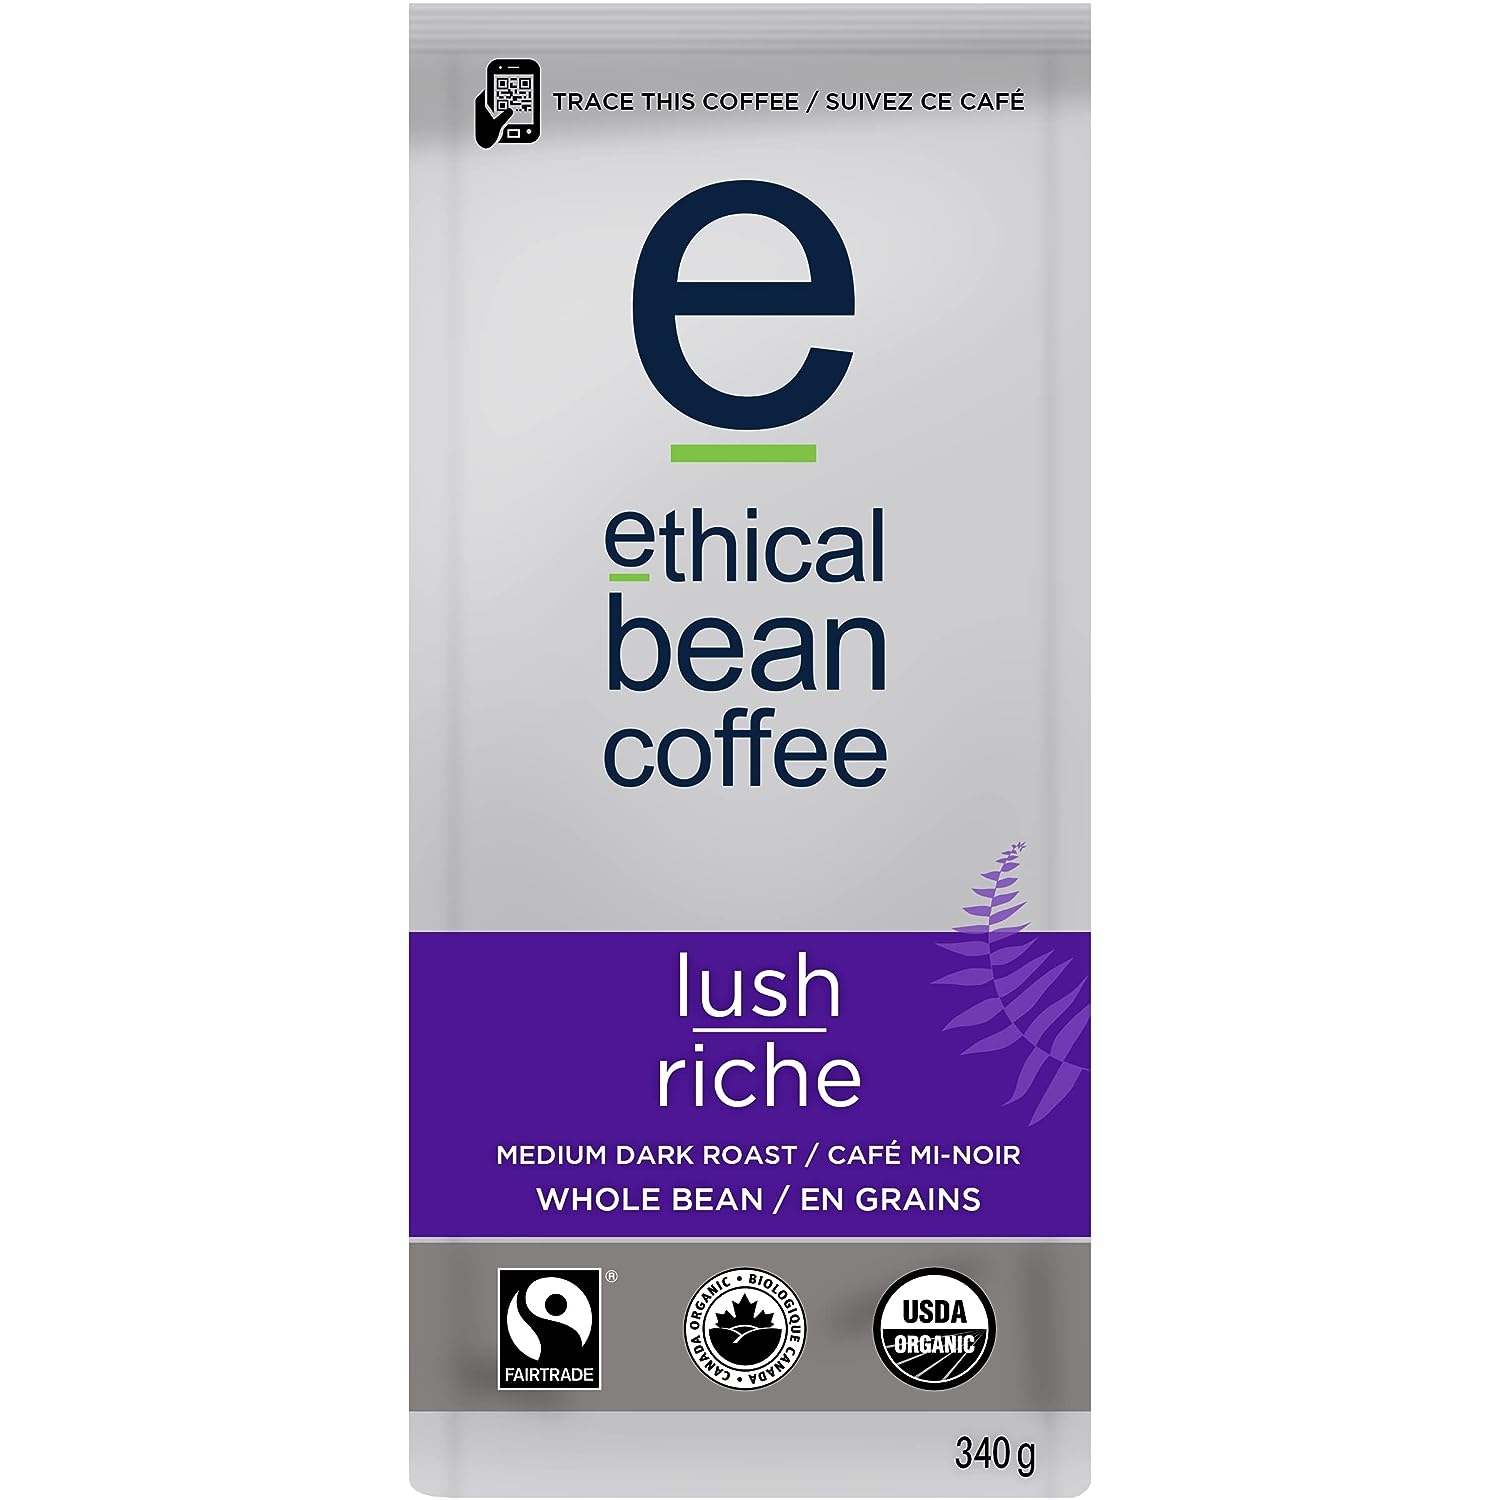 Lush Ethical Bean Coffee: Medium Dark Roast Whole Bean Coffee - USDA Certified Organic Coffee, Fair Trade Certified